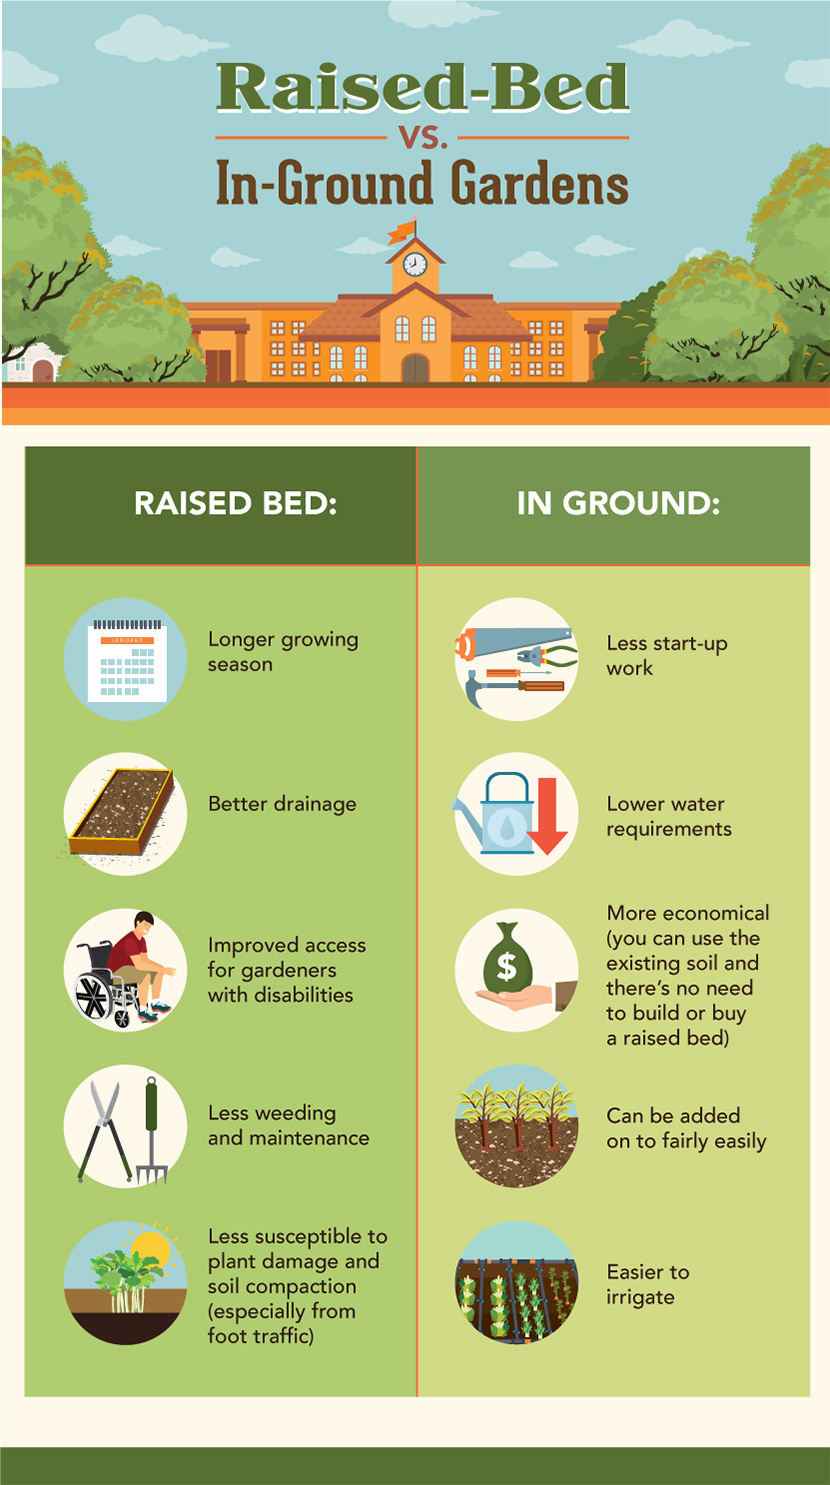 Raised bed gardens vs ground gardens